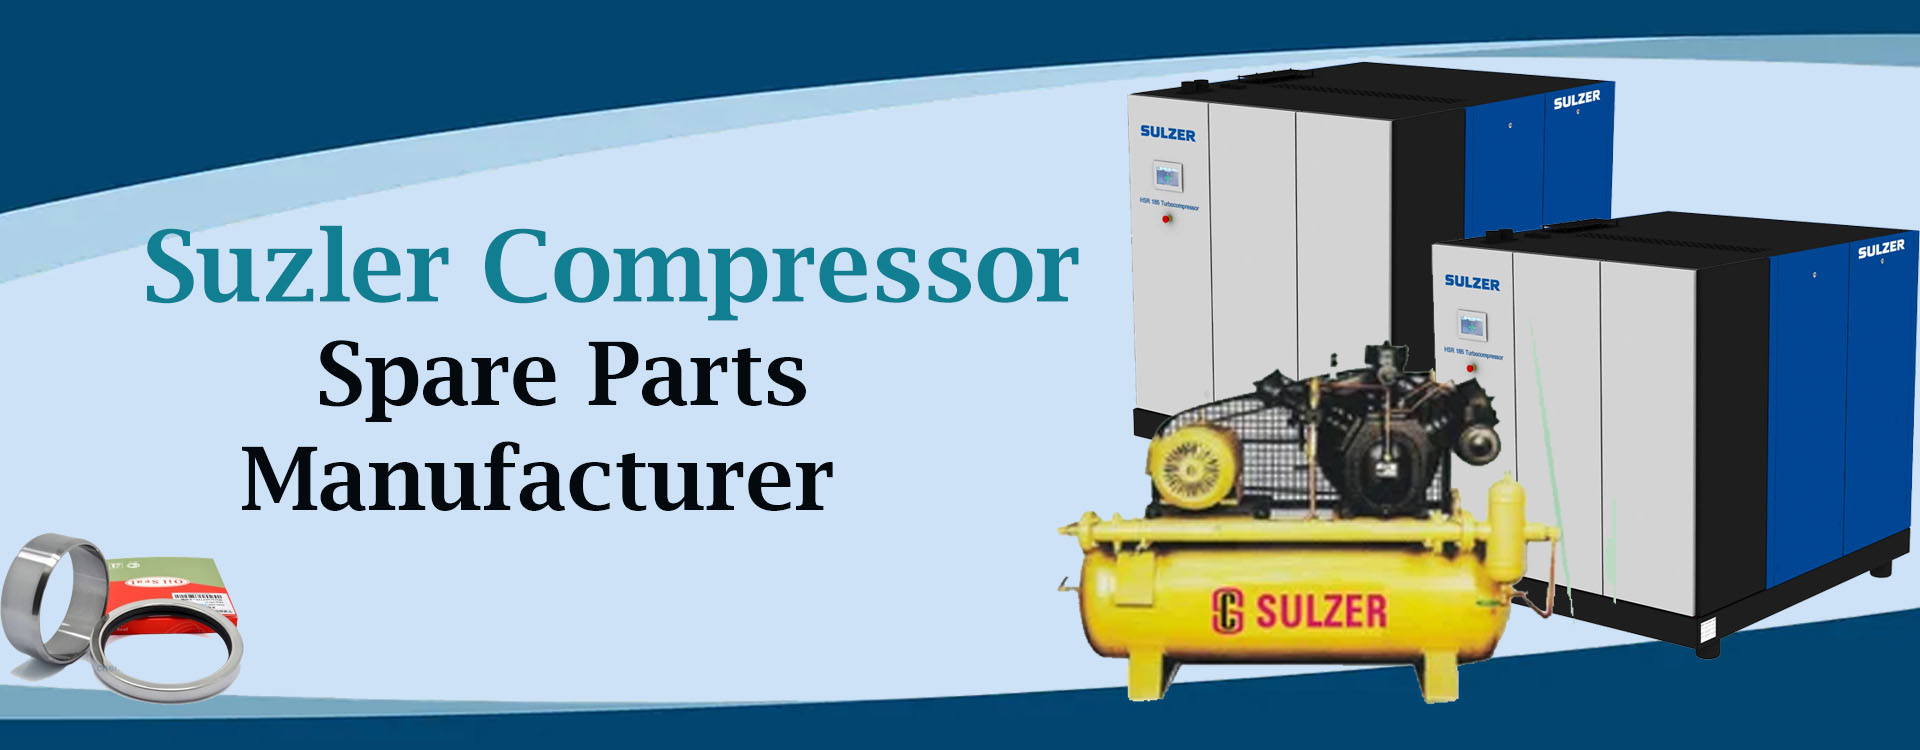 Suzler Compressor Spare Part Manufacturer In india